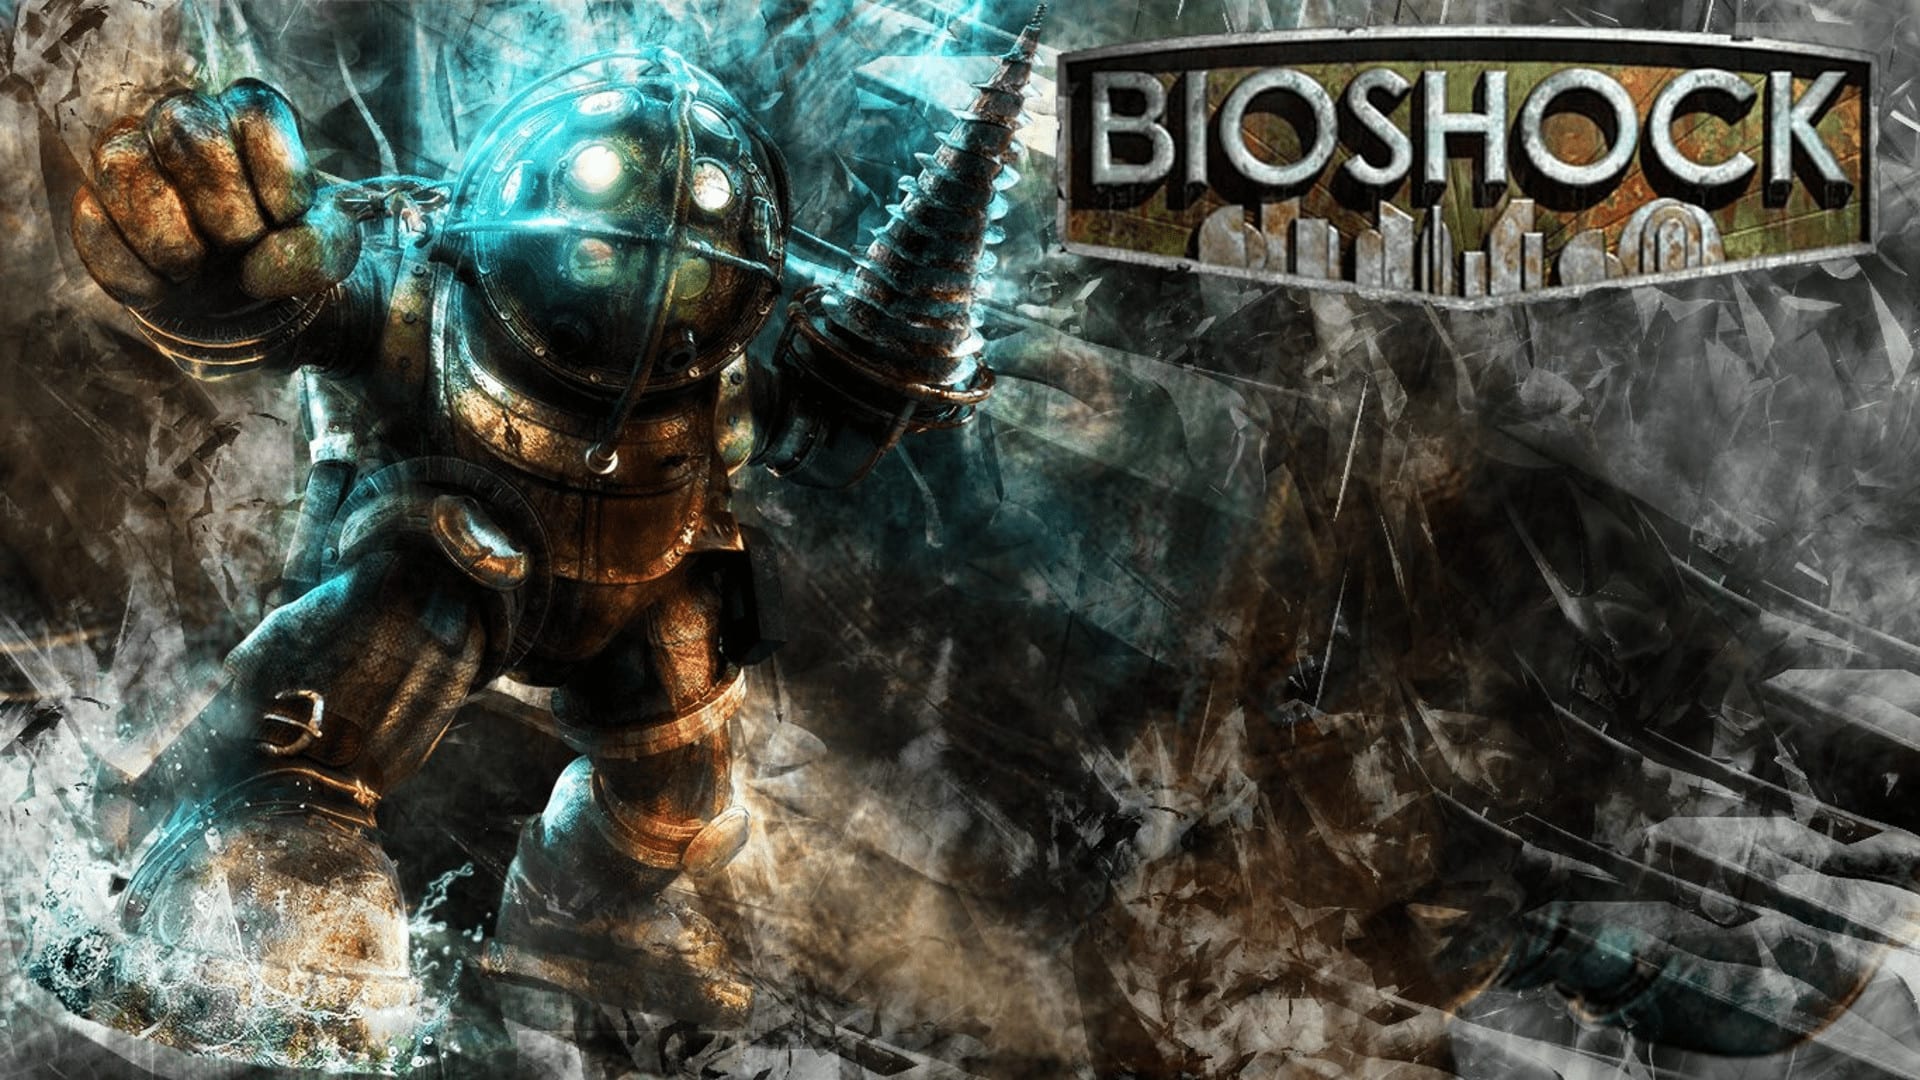 BioShock-promo-featured-image-min.jpg